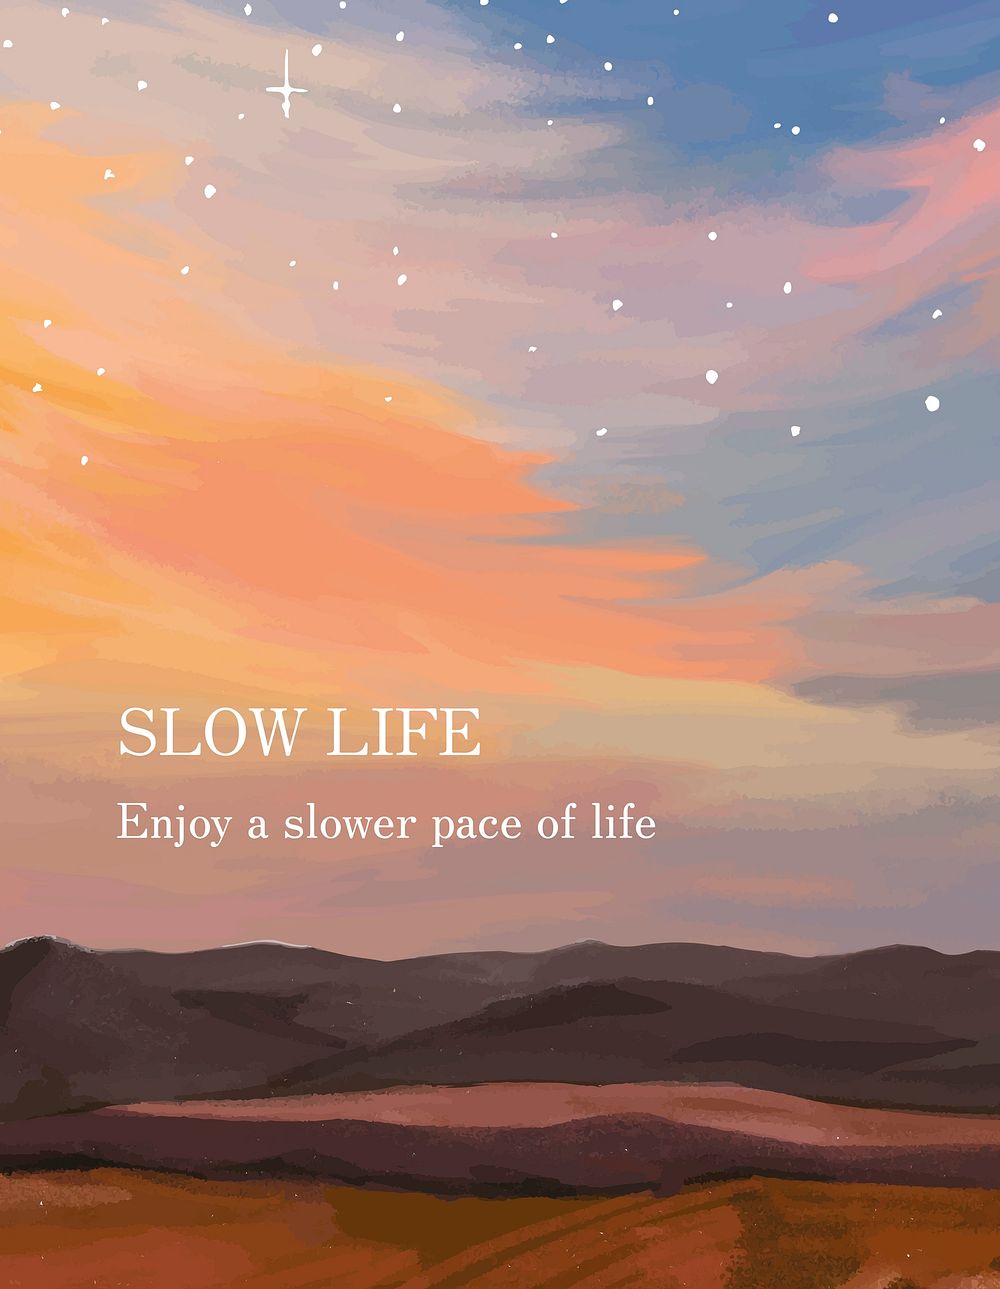 Slow lifestyle flyer template, editable text psd